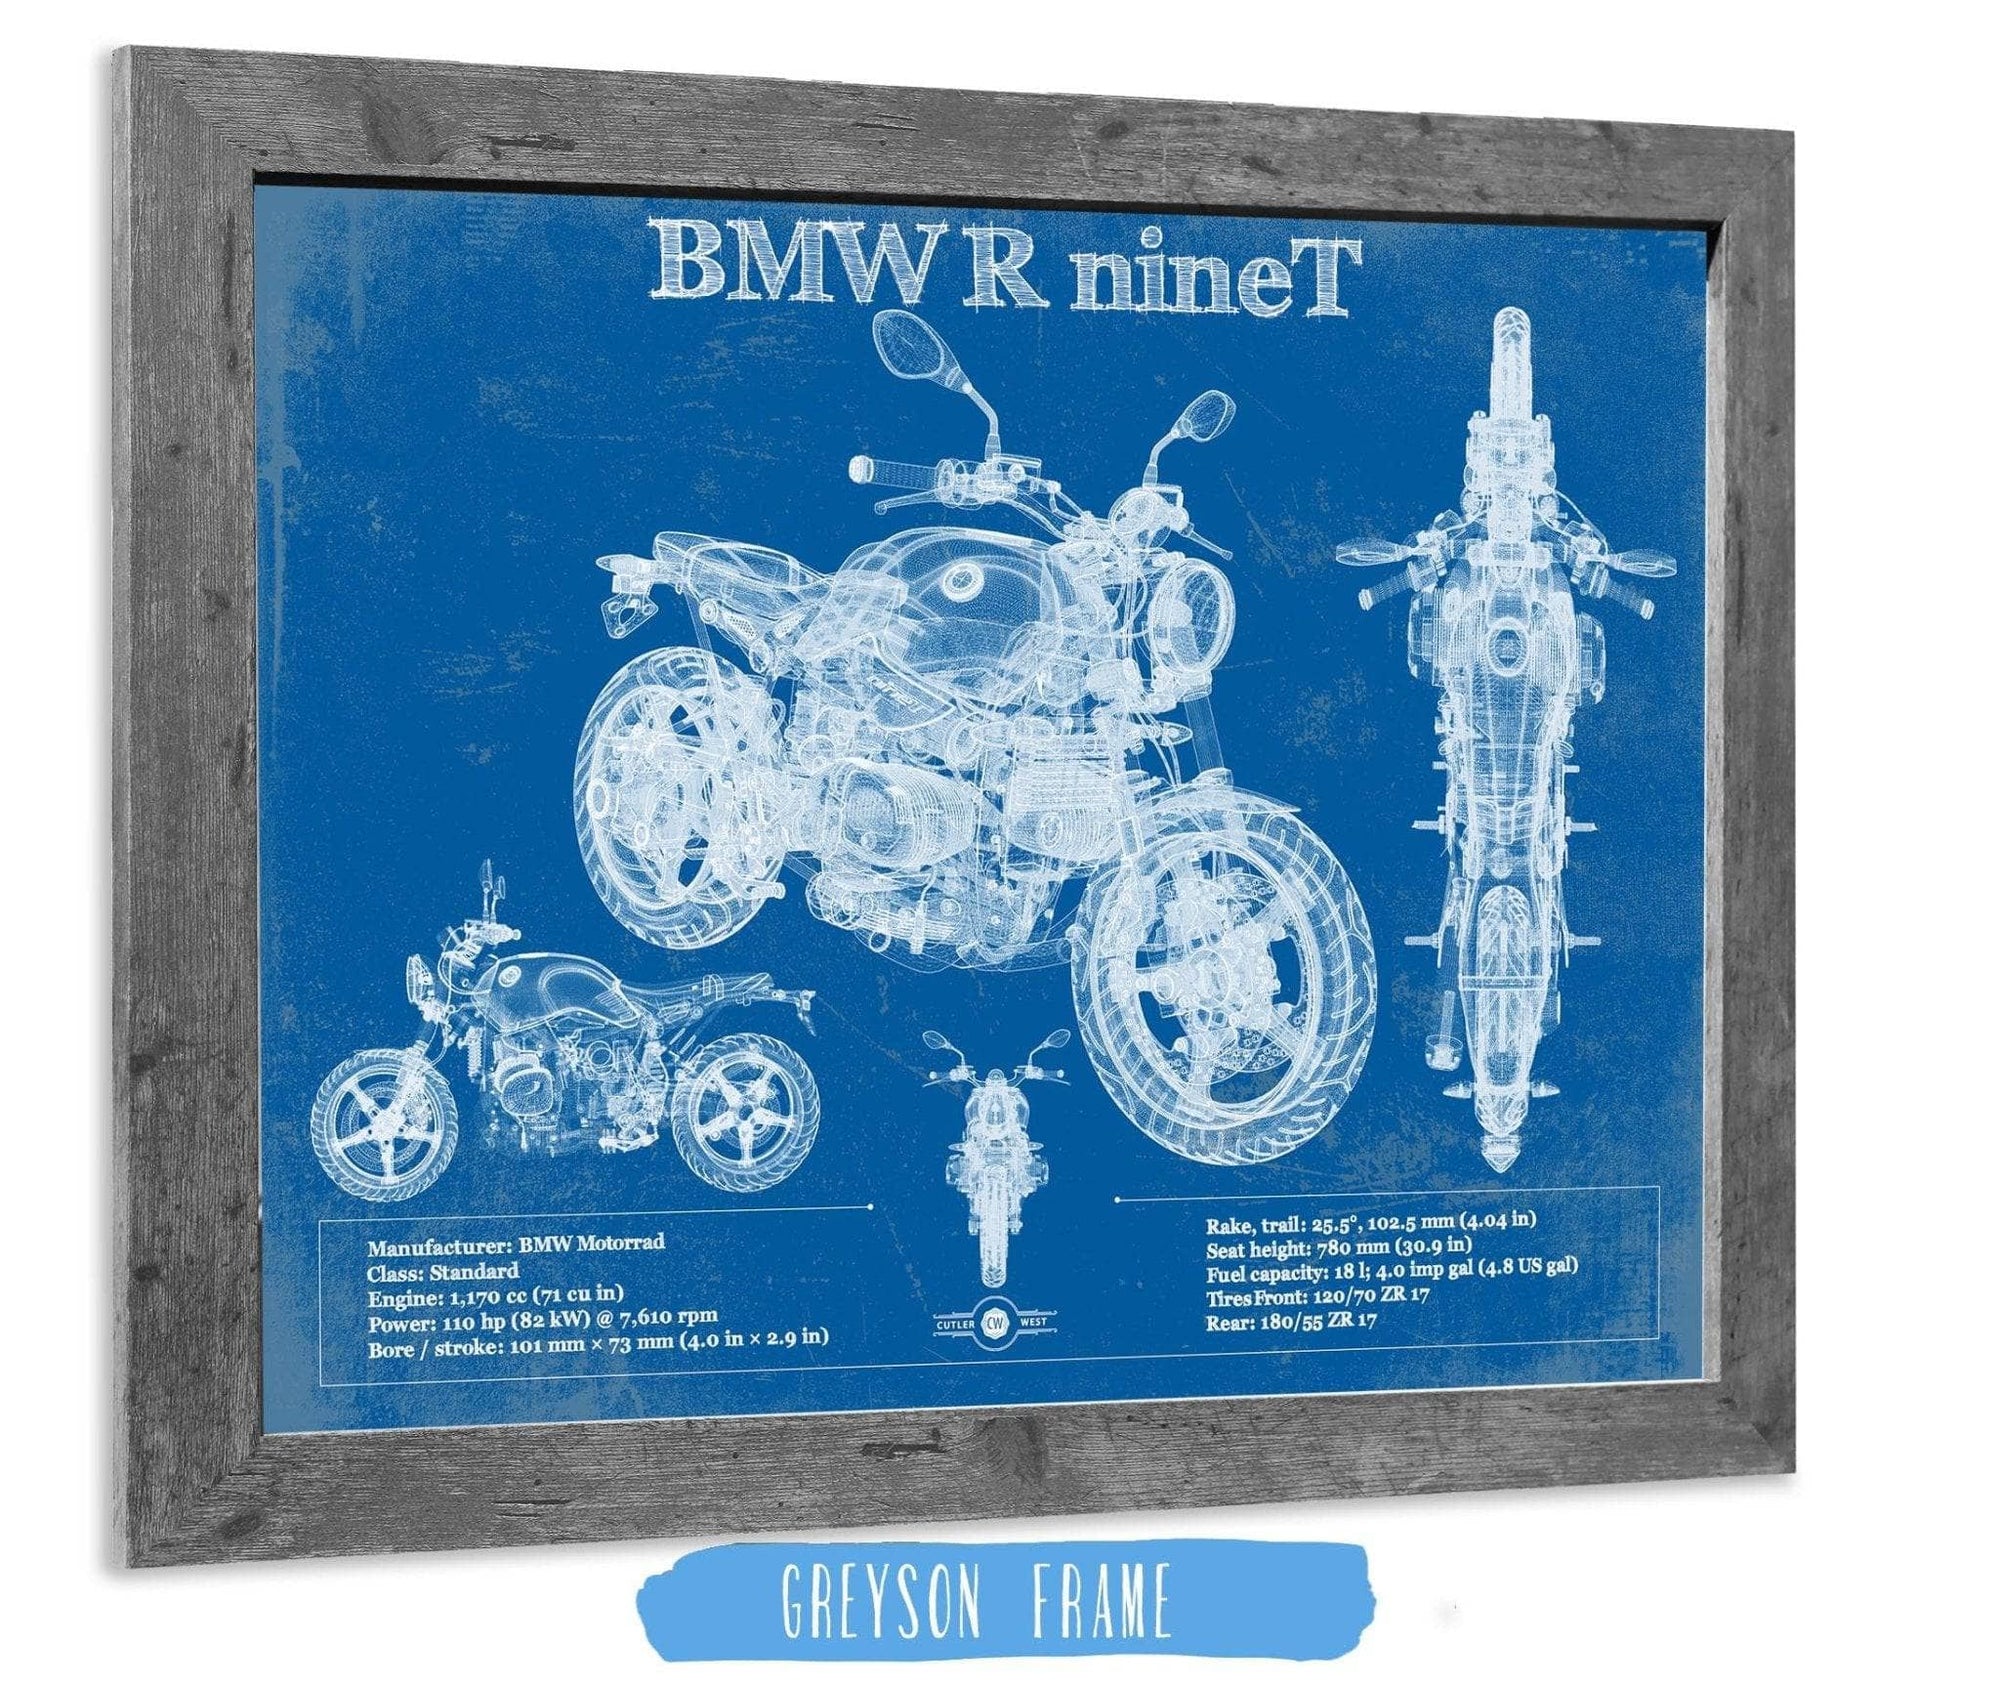 Cutler West Vehicle Collection 14" x 11" / Greyson Frame BMW R nine T Blueprint Vintage Motorcycle Print 945000346_47556